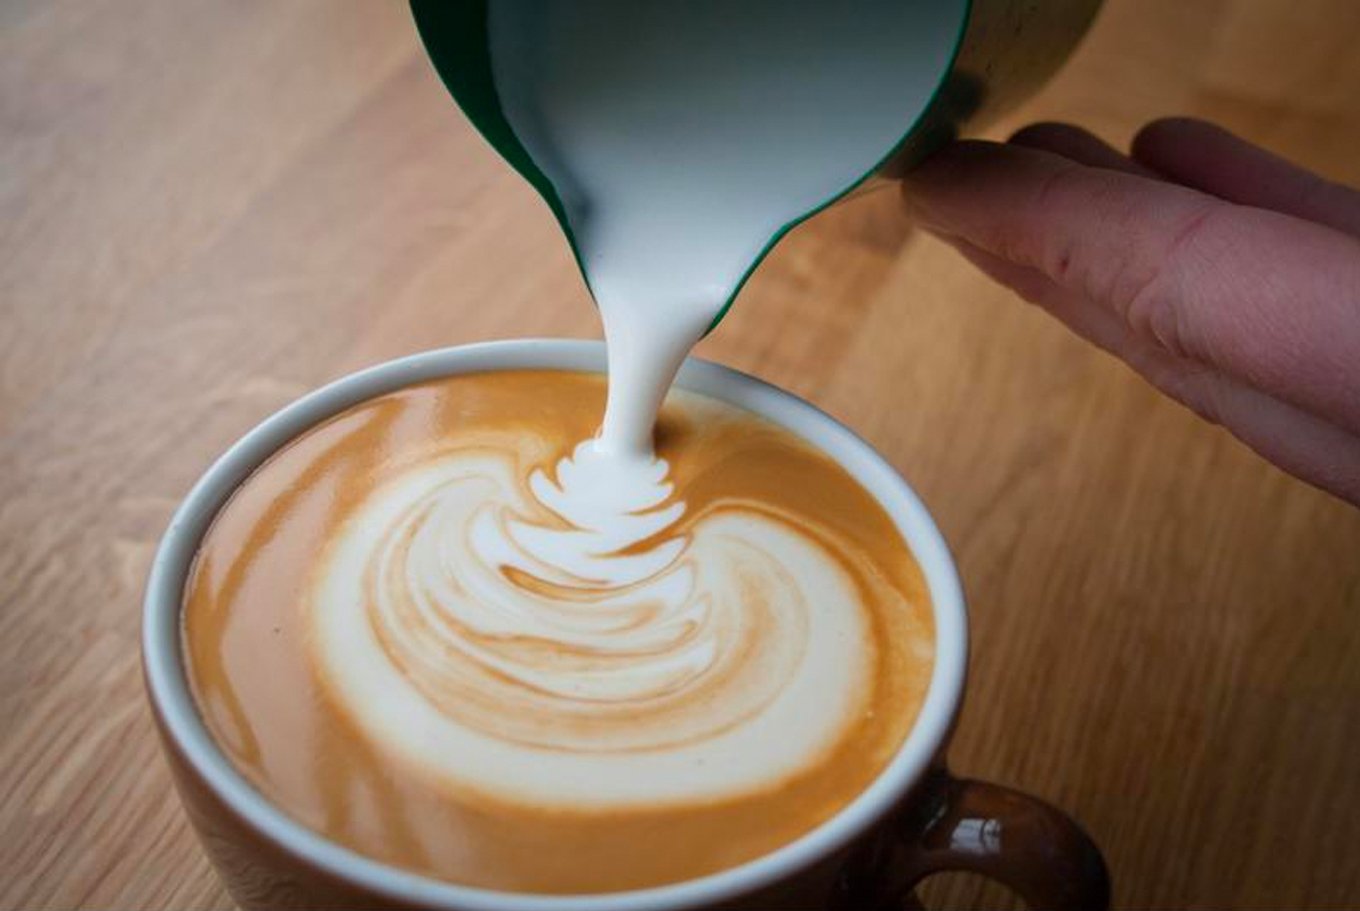 HOW TO MAKE CBD COFFEE